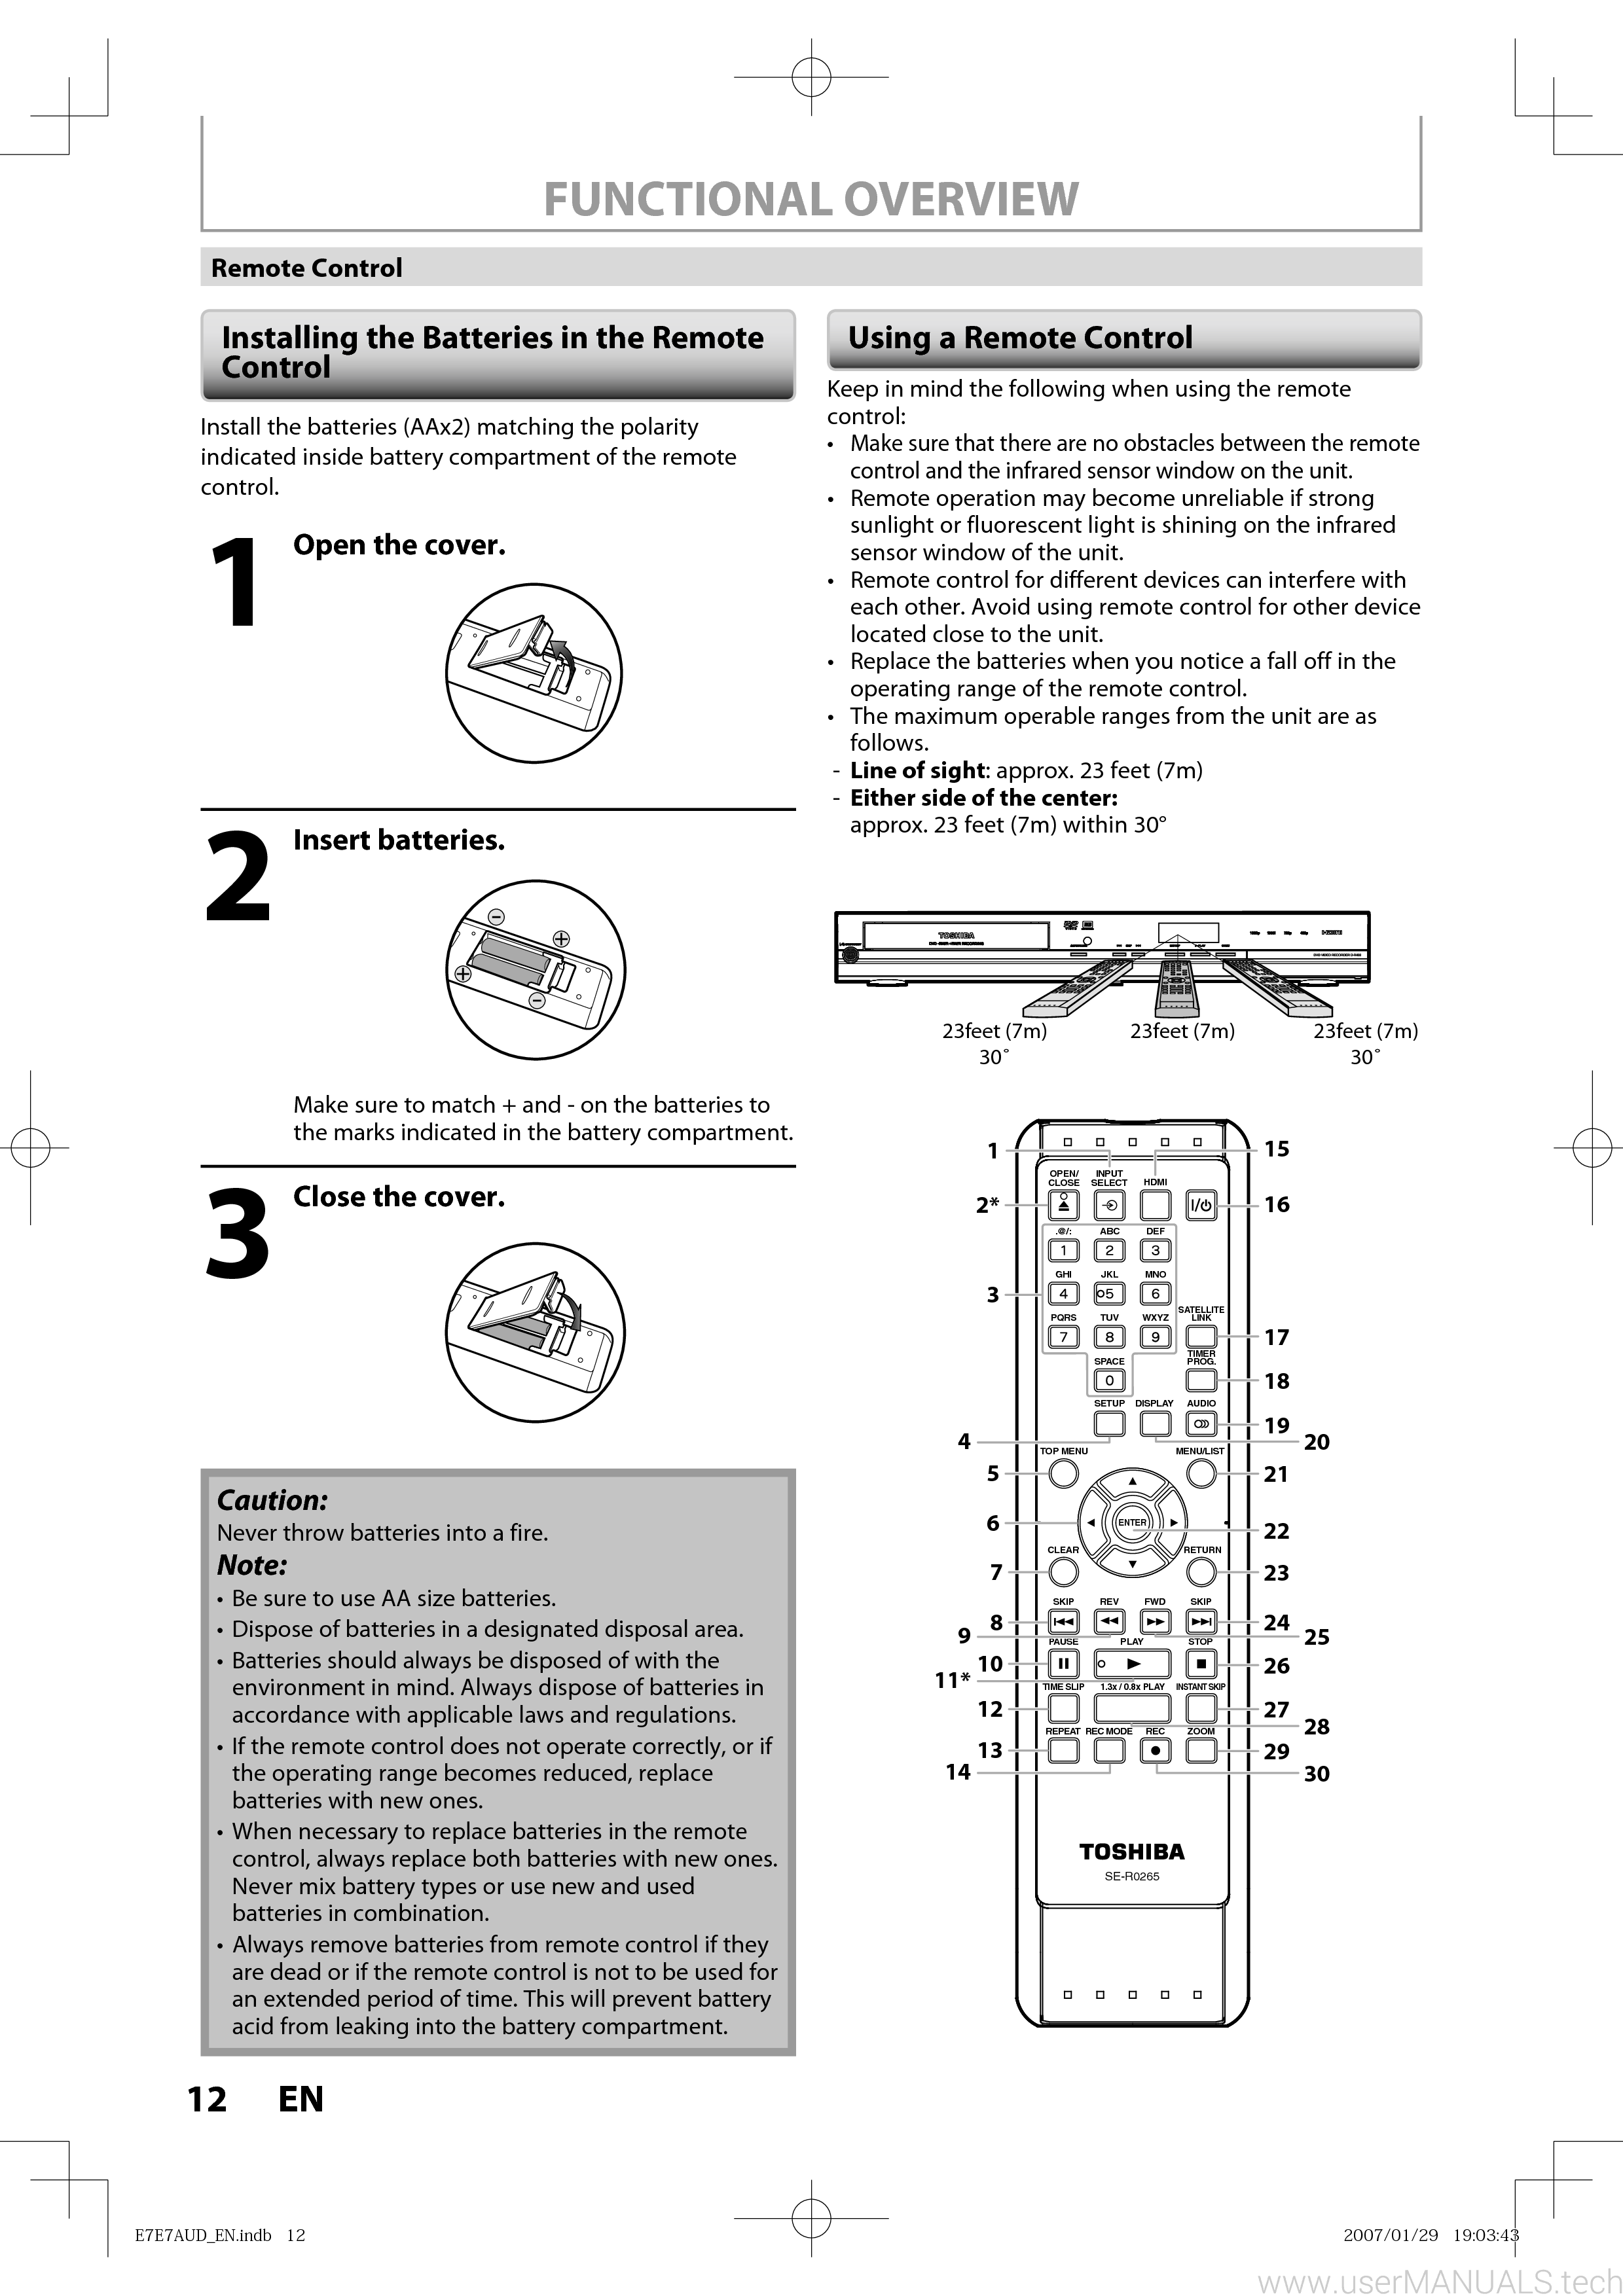 Toshiba D-r400 Manual, Page: 2